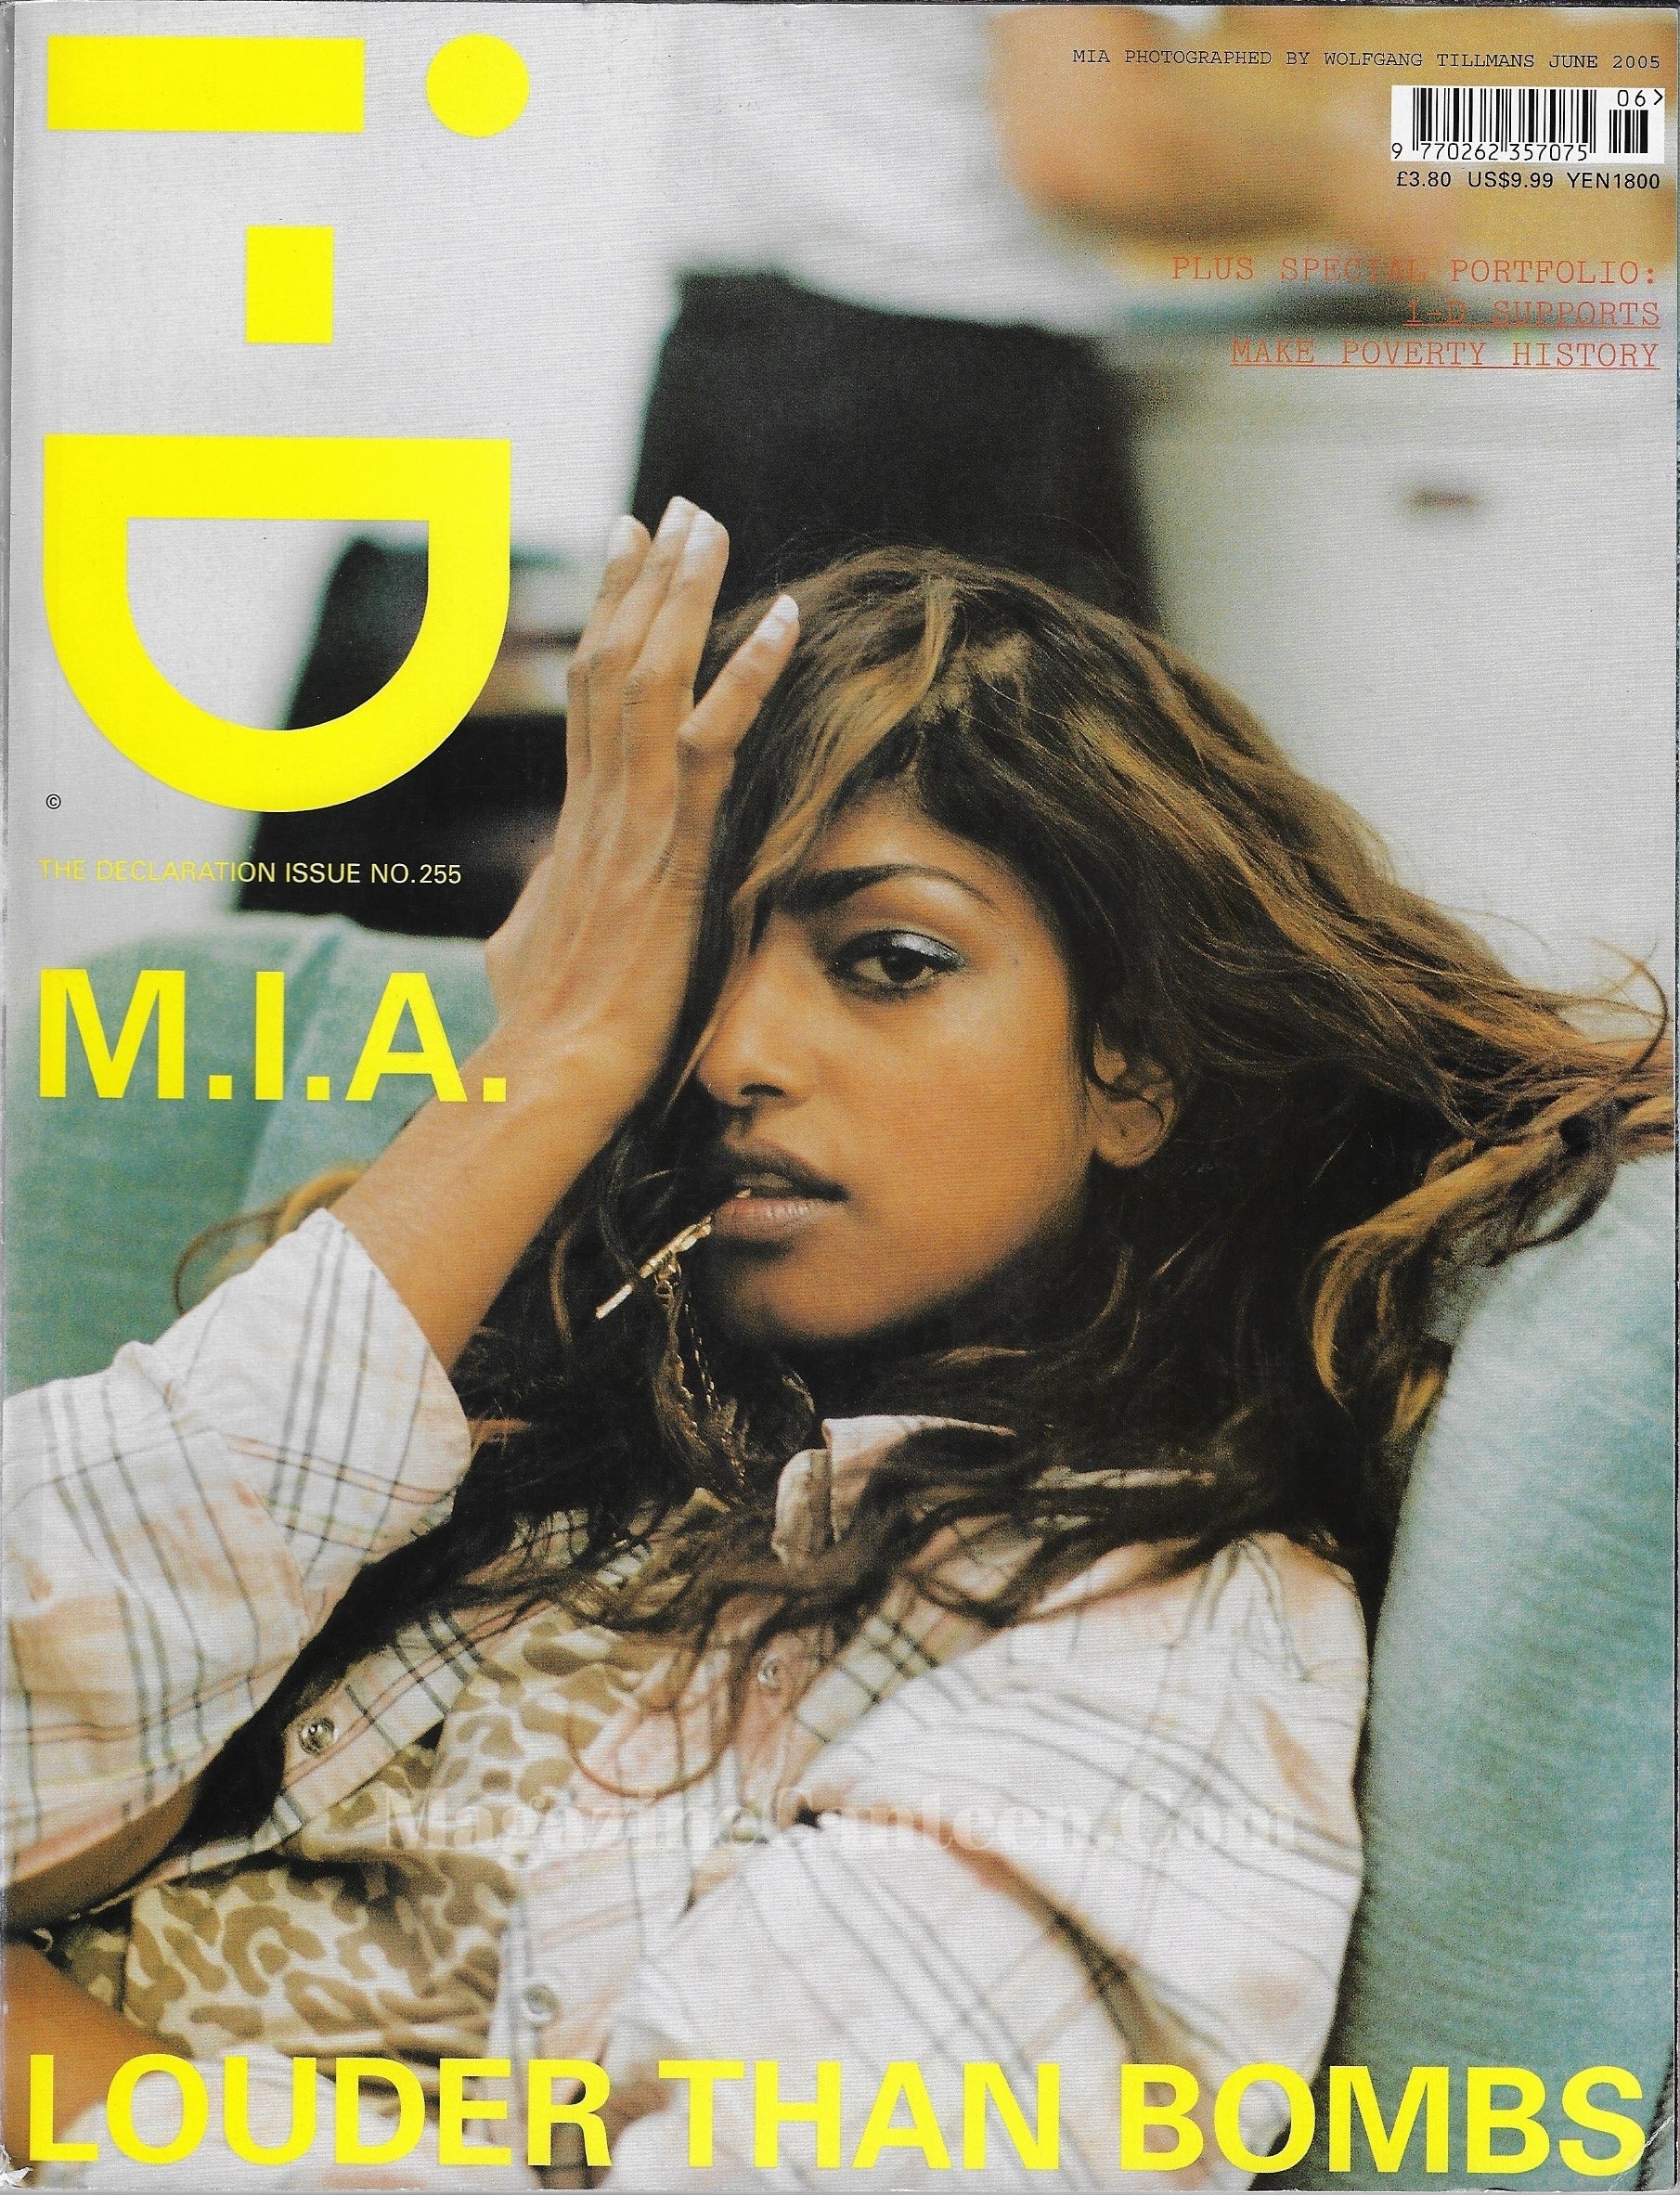 I-D Magazine 255 - Mia Wolfgang Tillmans 2005